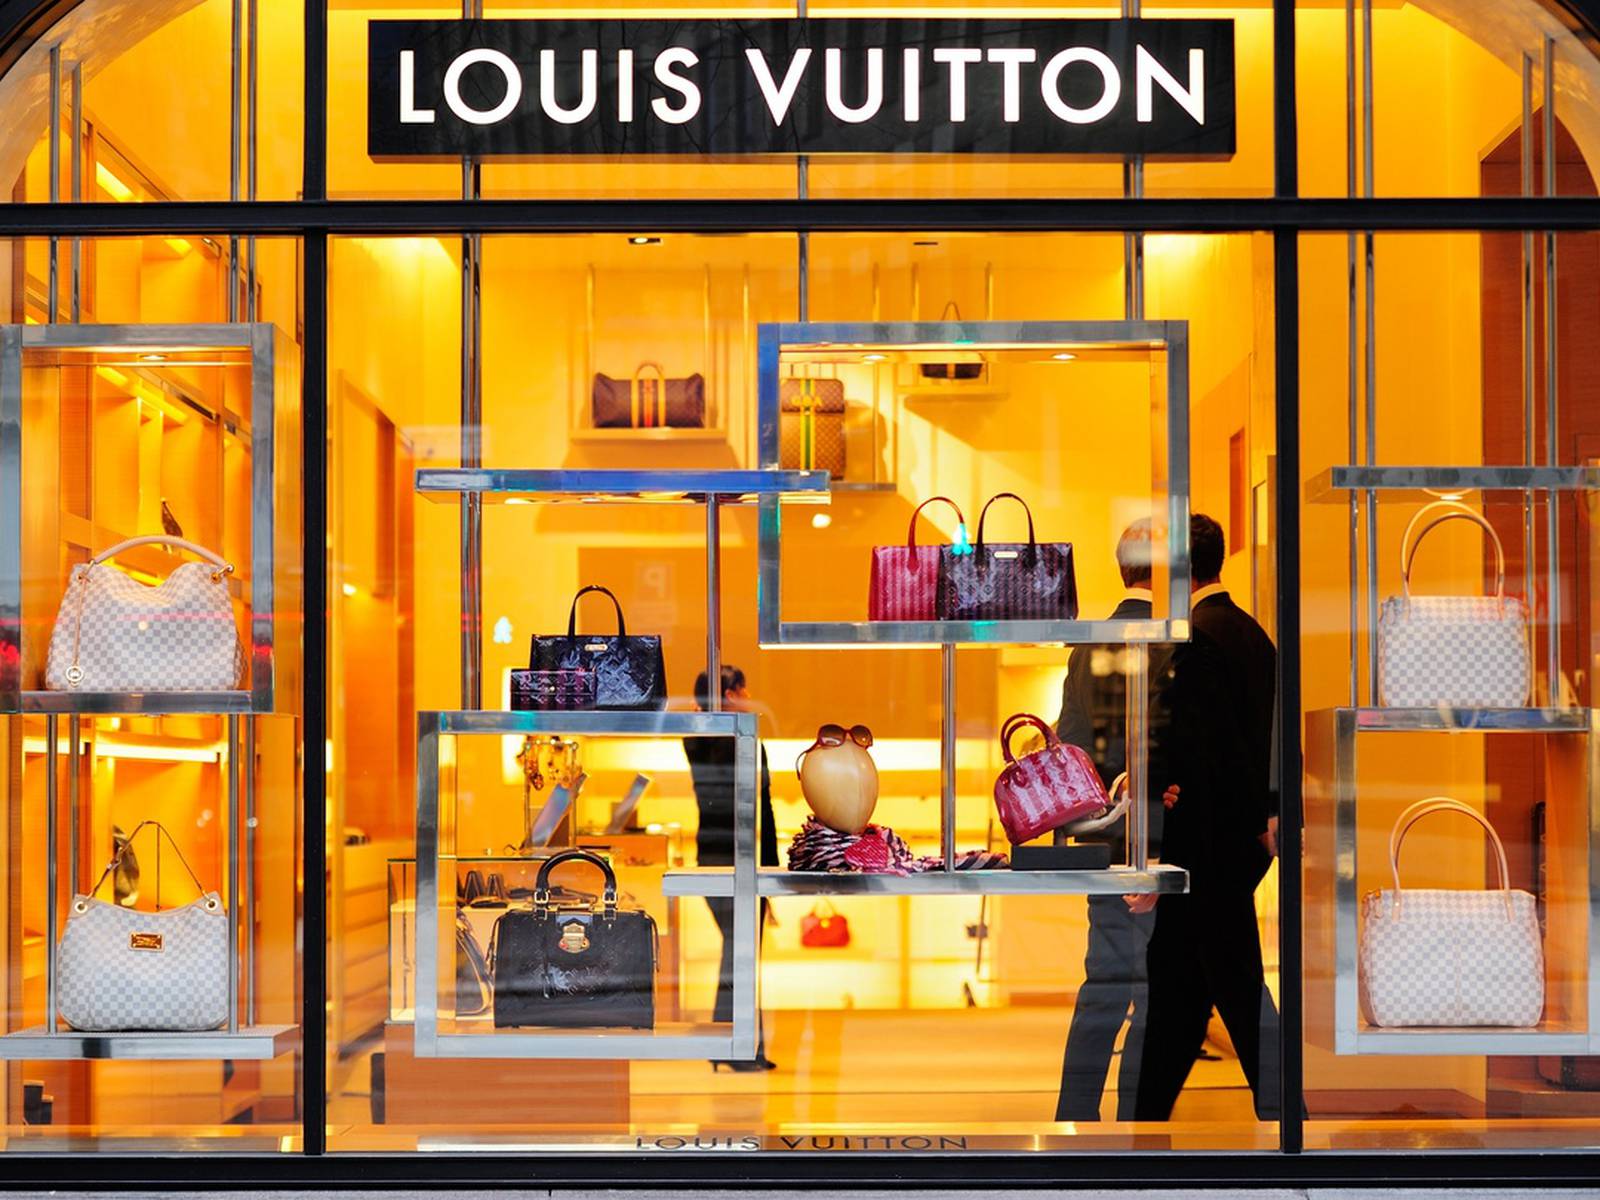 Louis Vuitton wallpaper, 1600x1200